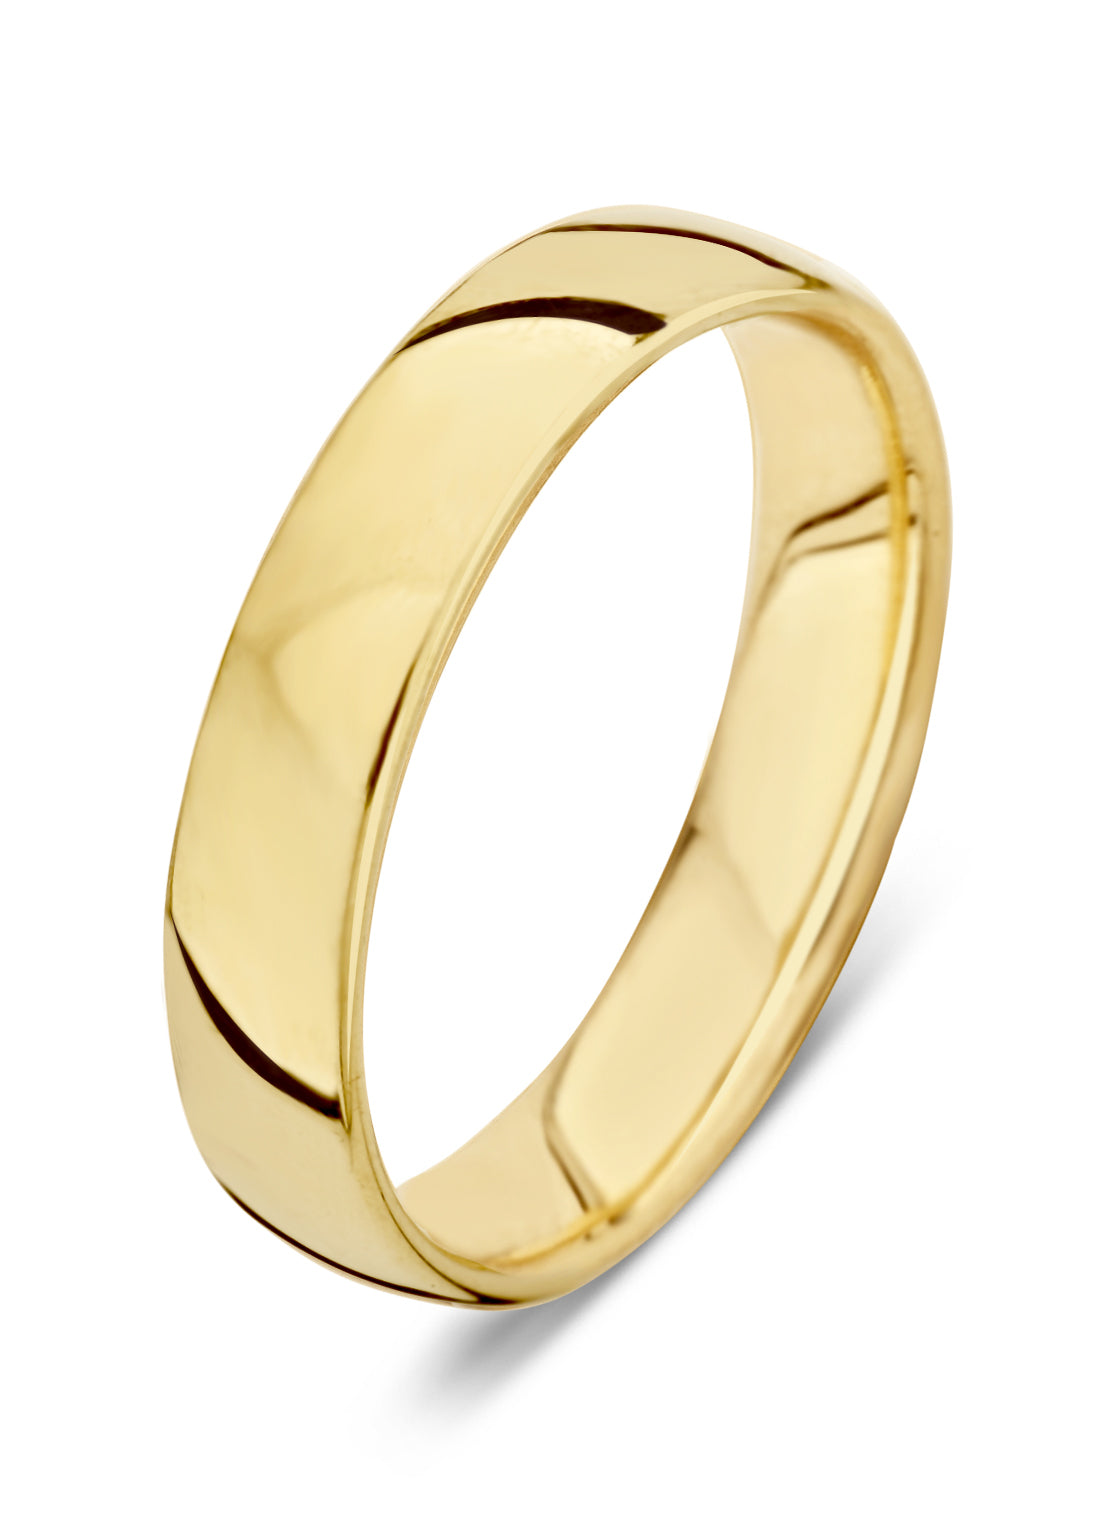 Yellow gold 14 kt wedding ring